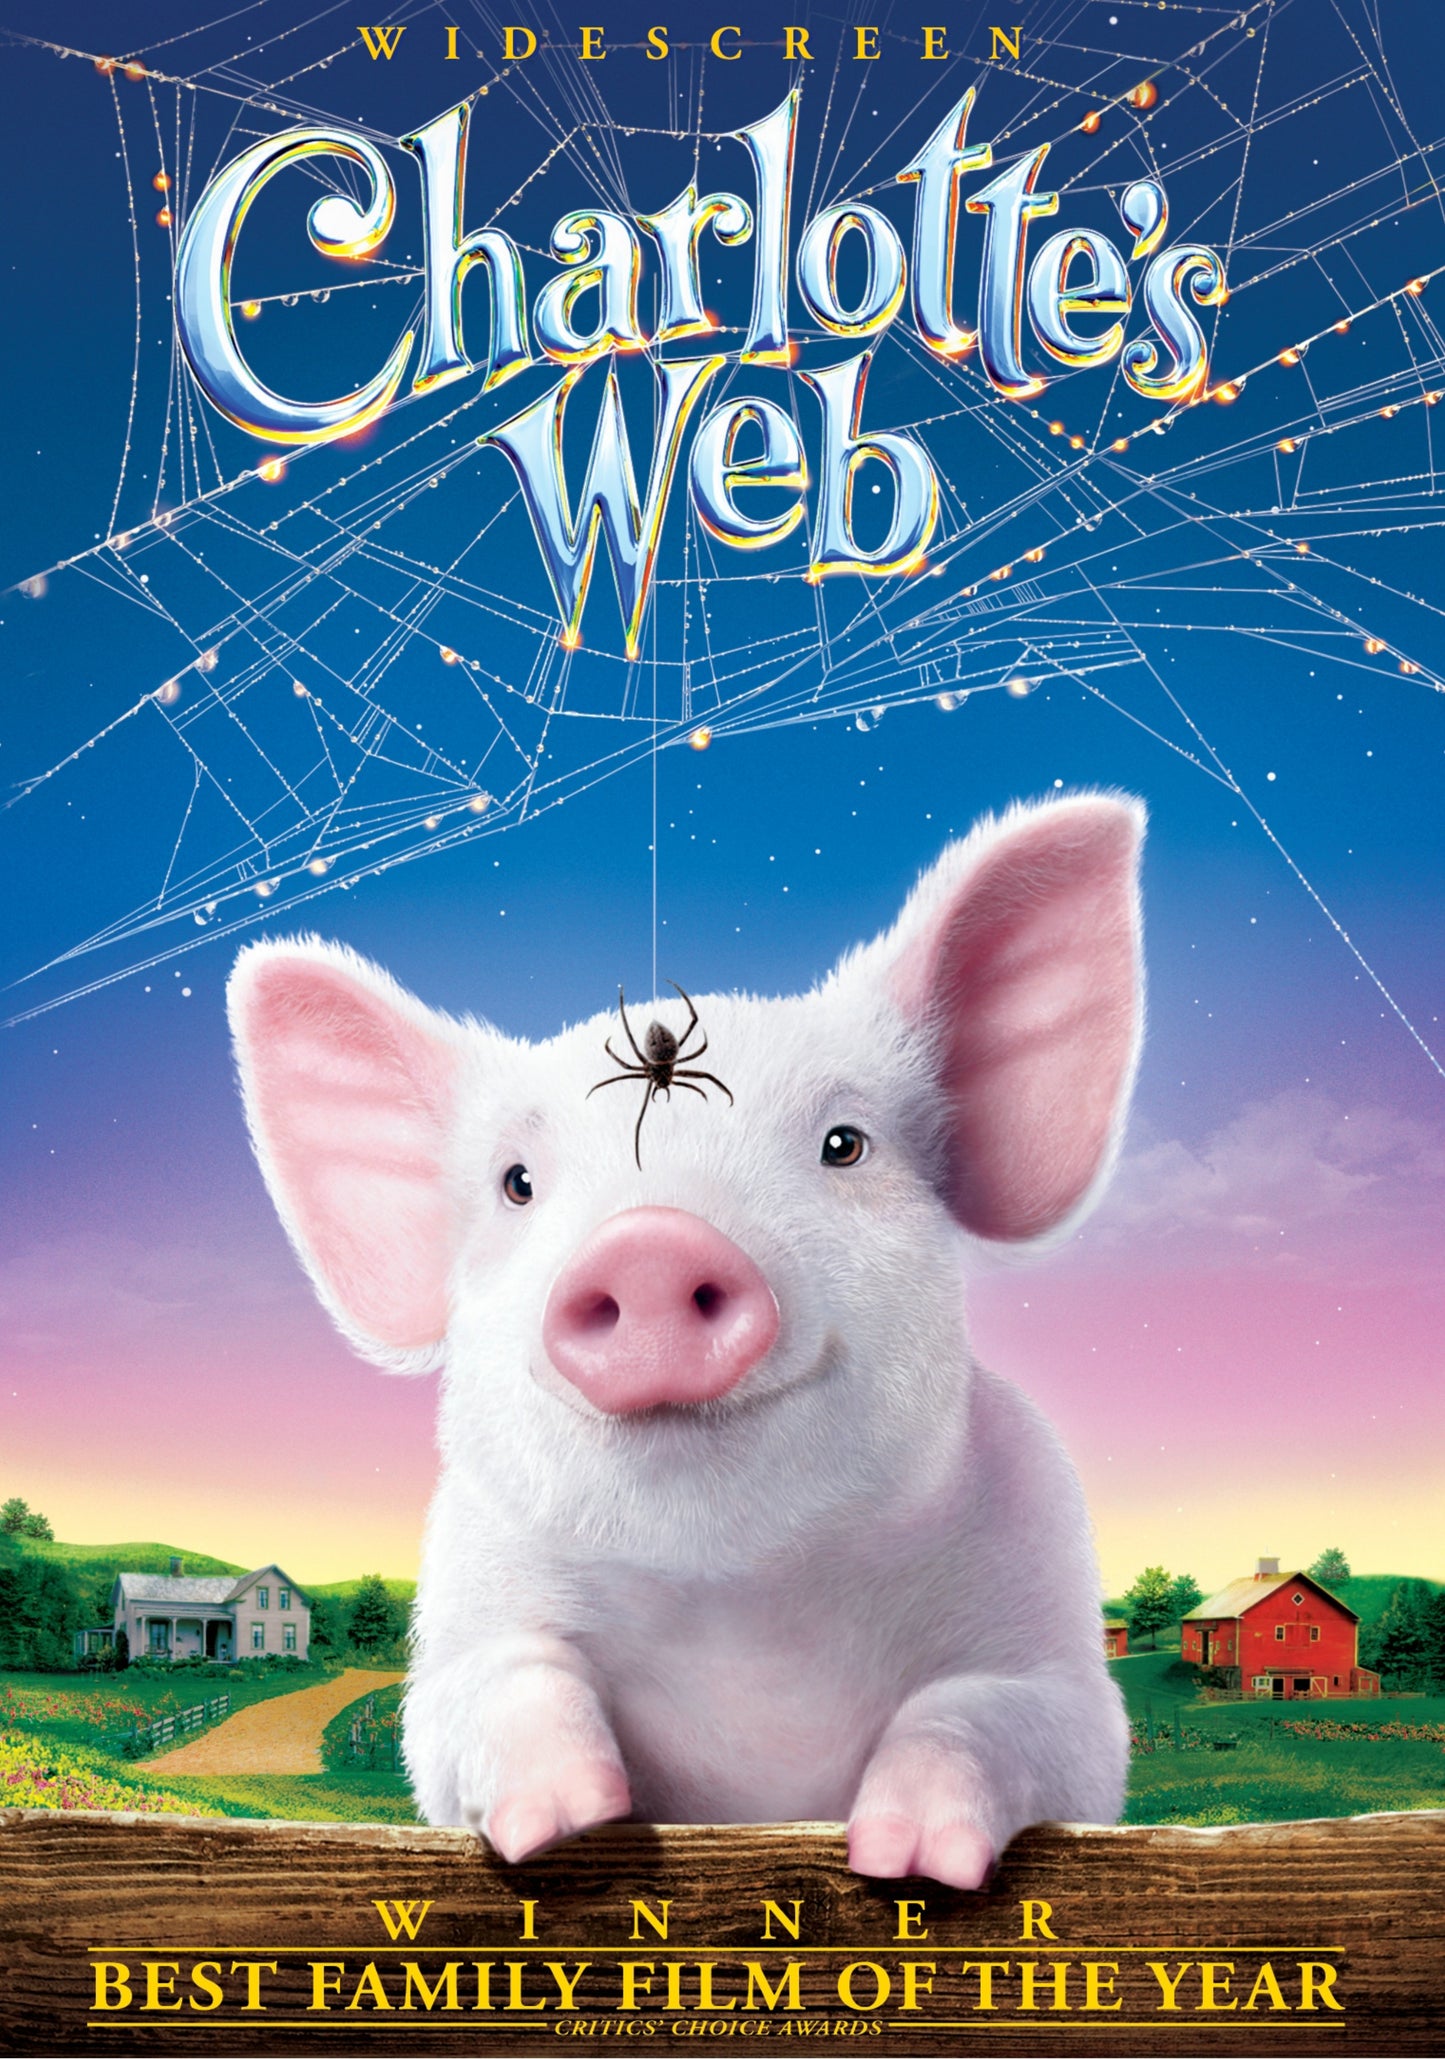 Charlotte's Web cover art